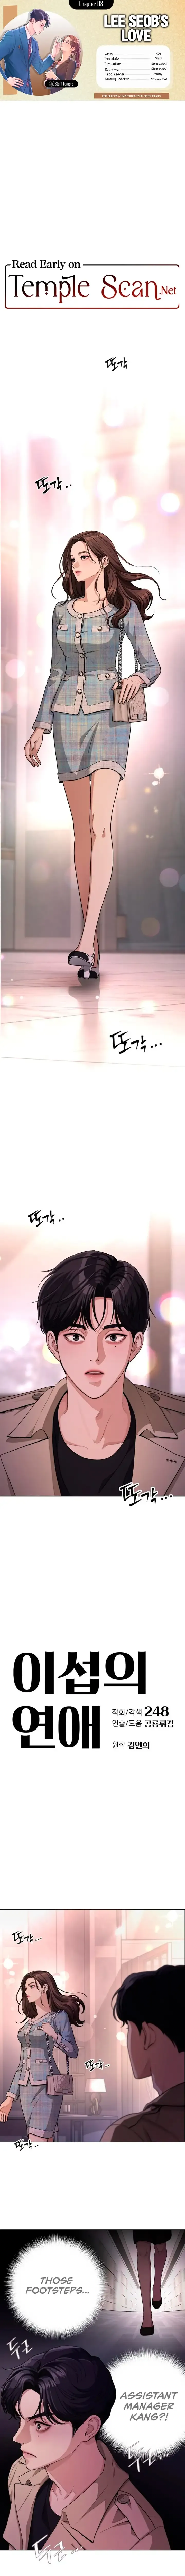 Lee Seob’s love chapter 8